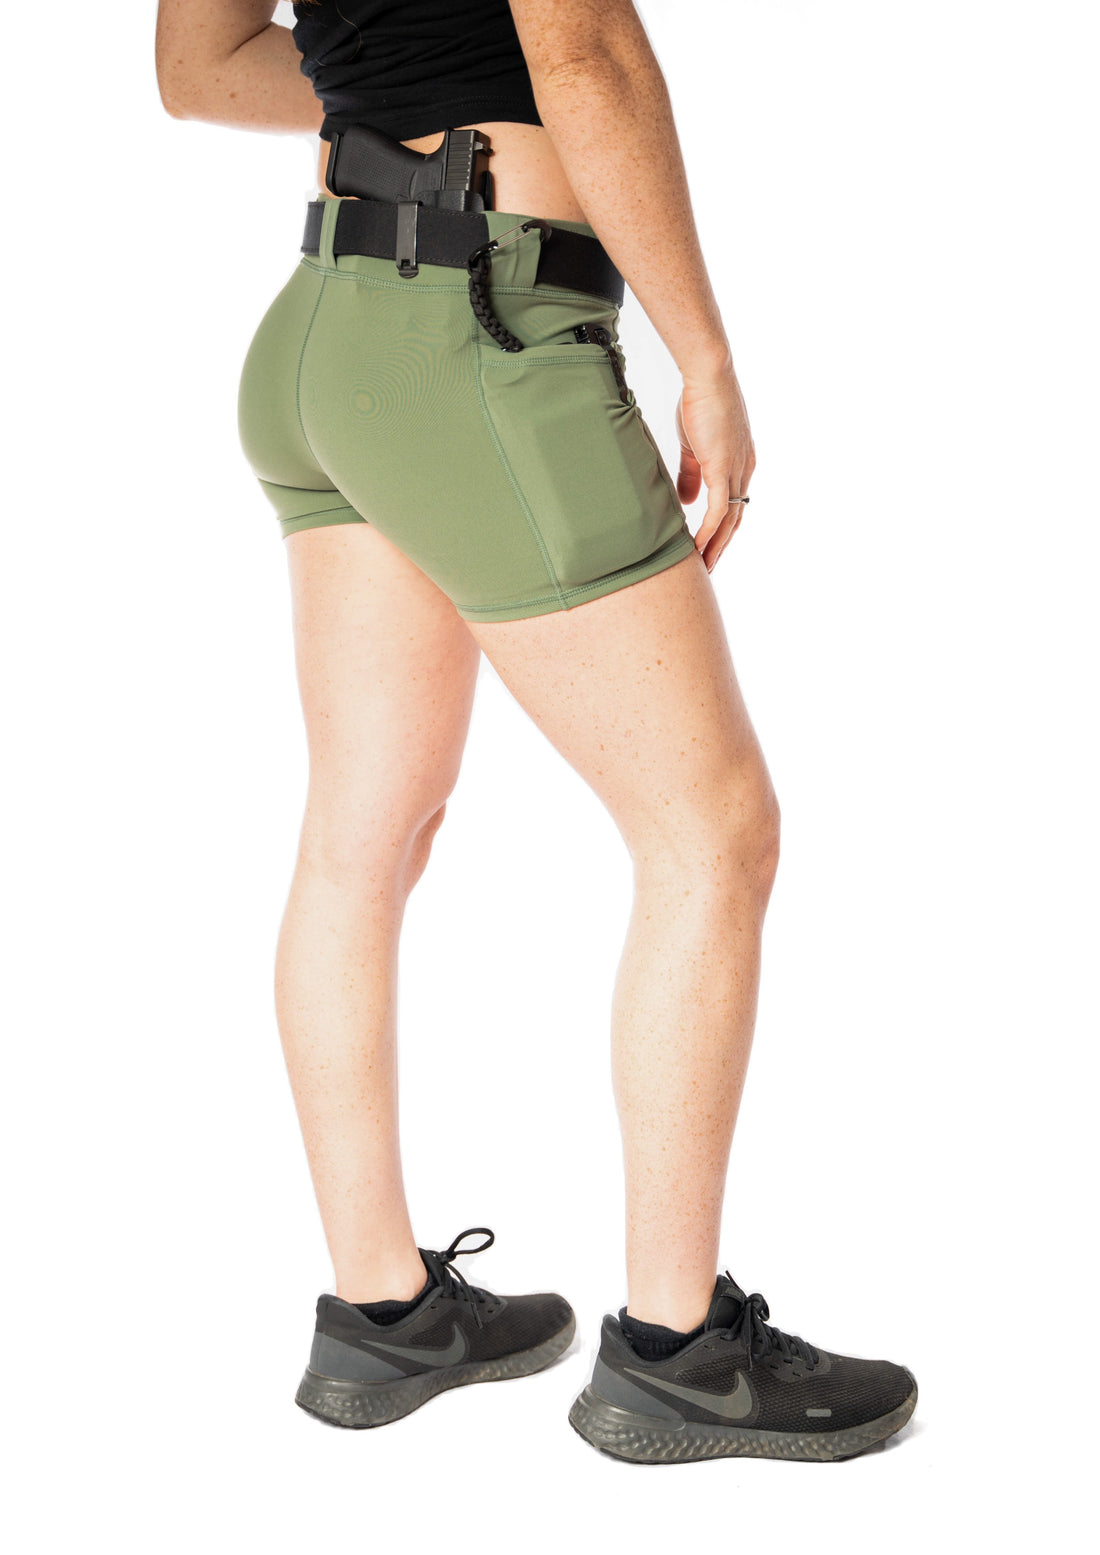 Original Design Low Rise Women's Compression Carry Shorts - Olive